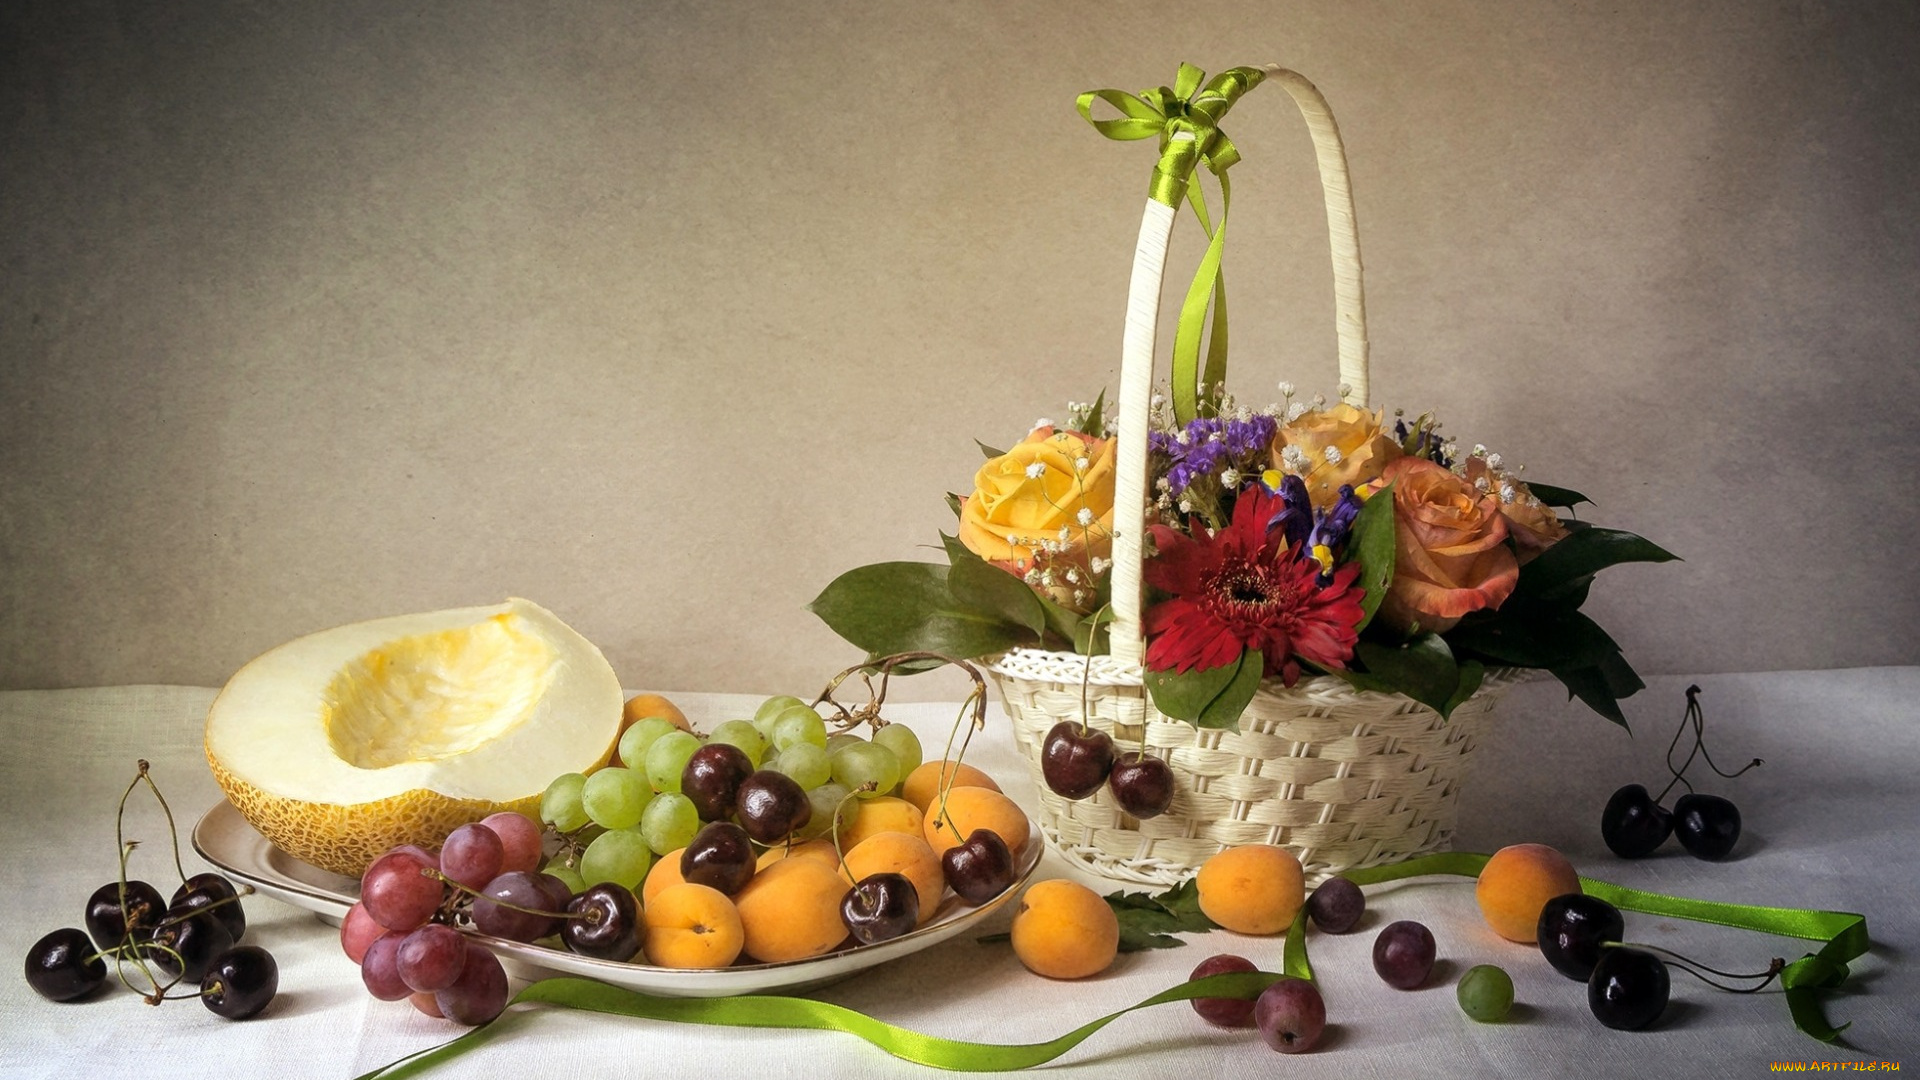 еда, фрукты, , ягоды, натюрморт, розы, корзина, цветы, виноград, черешня, гербера, дыня, абрикосы